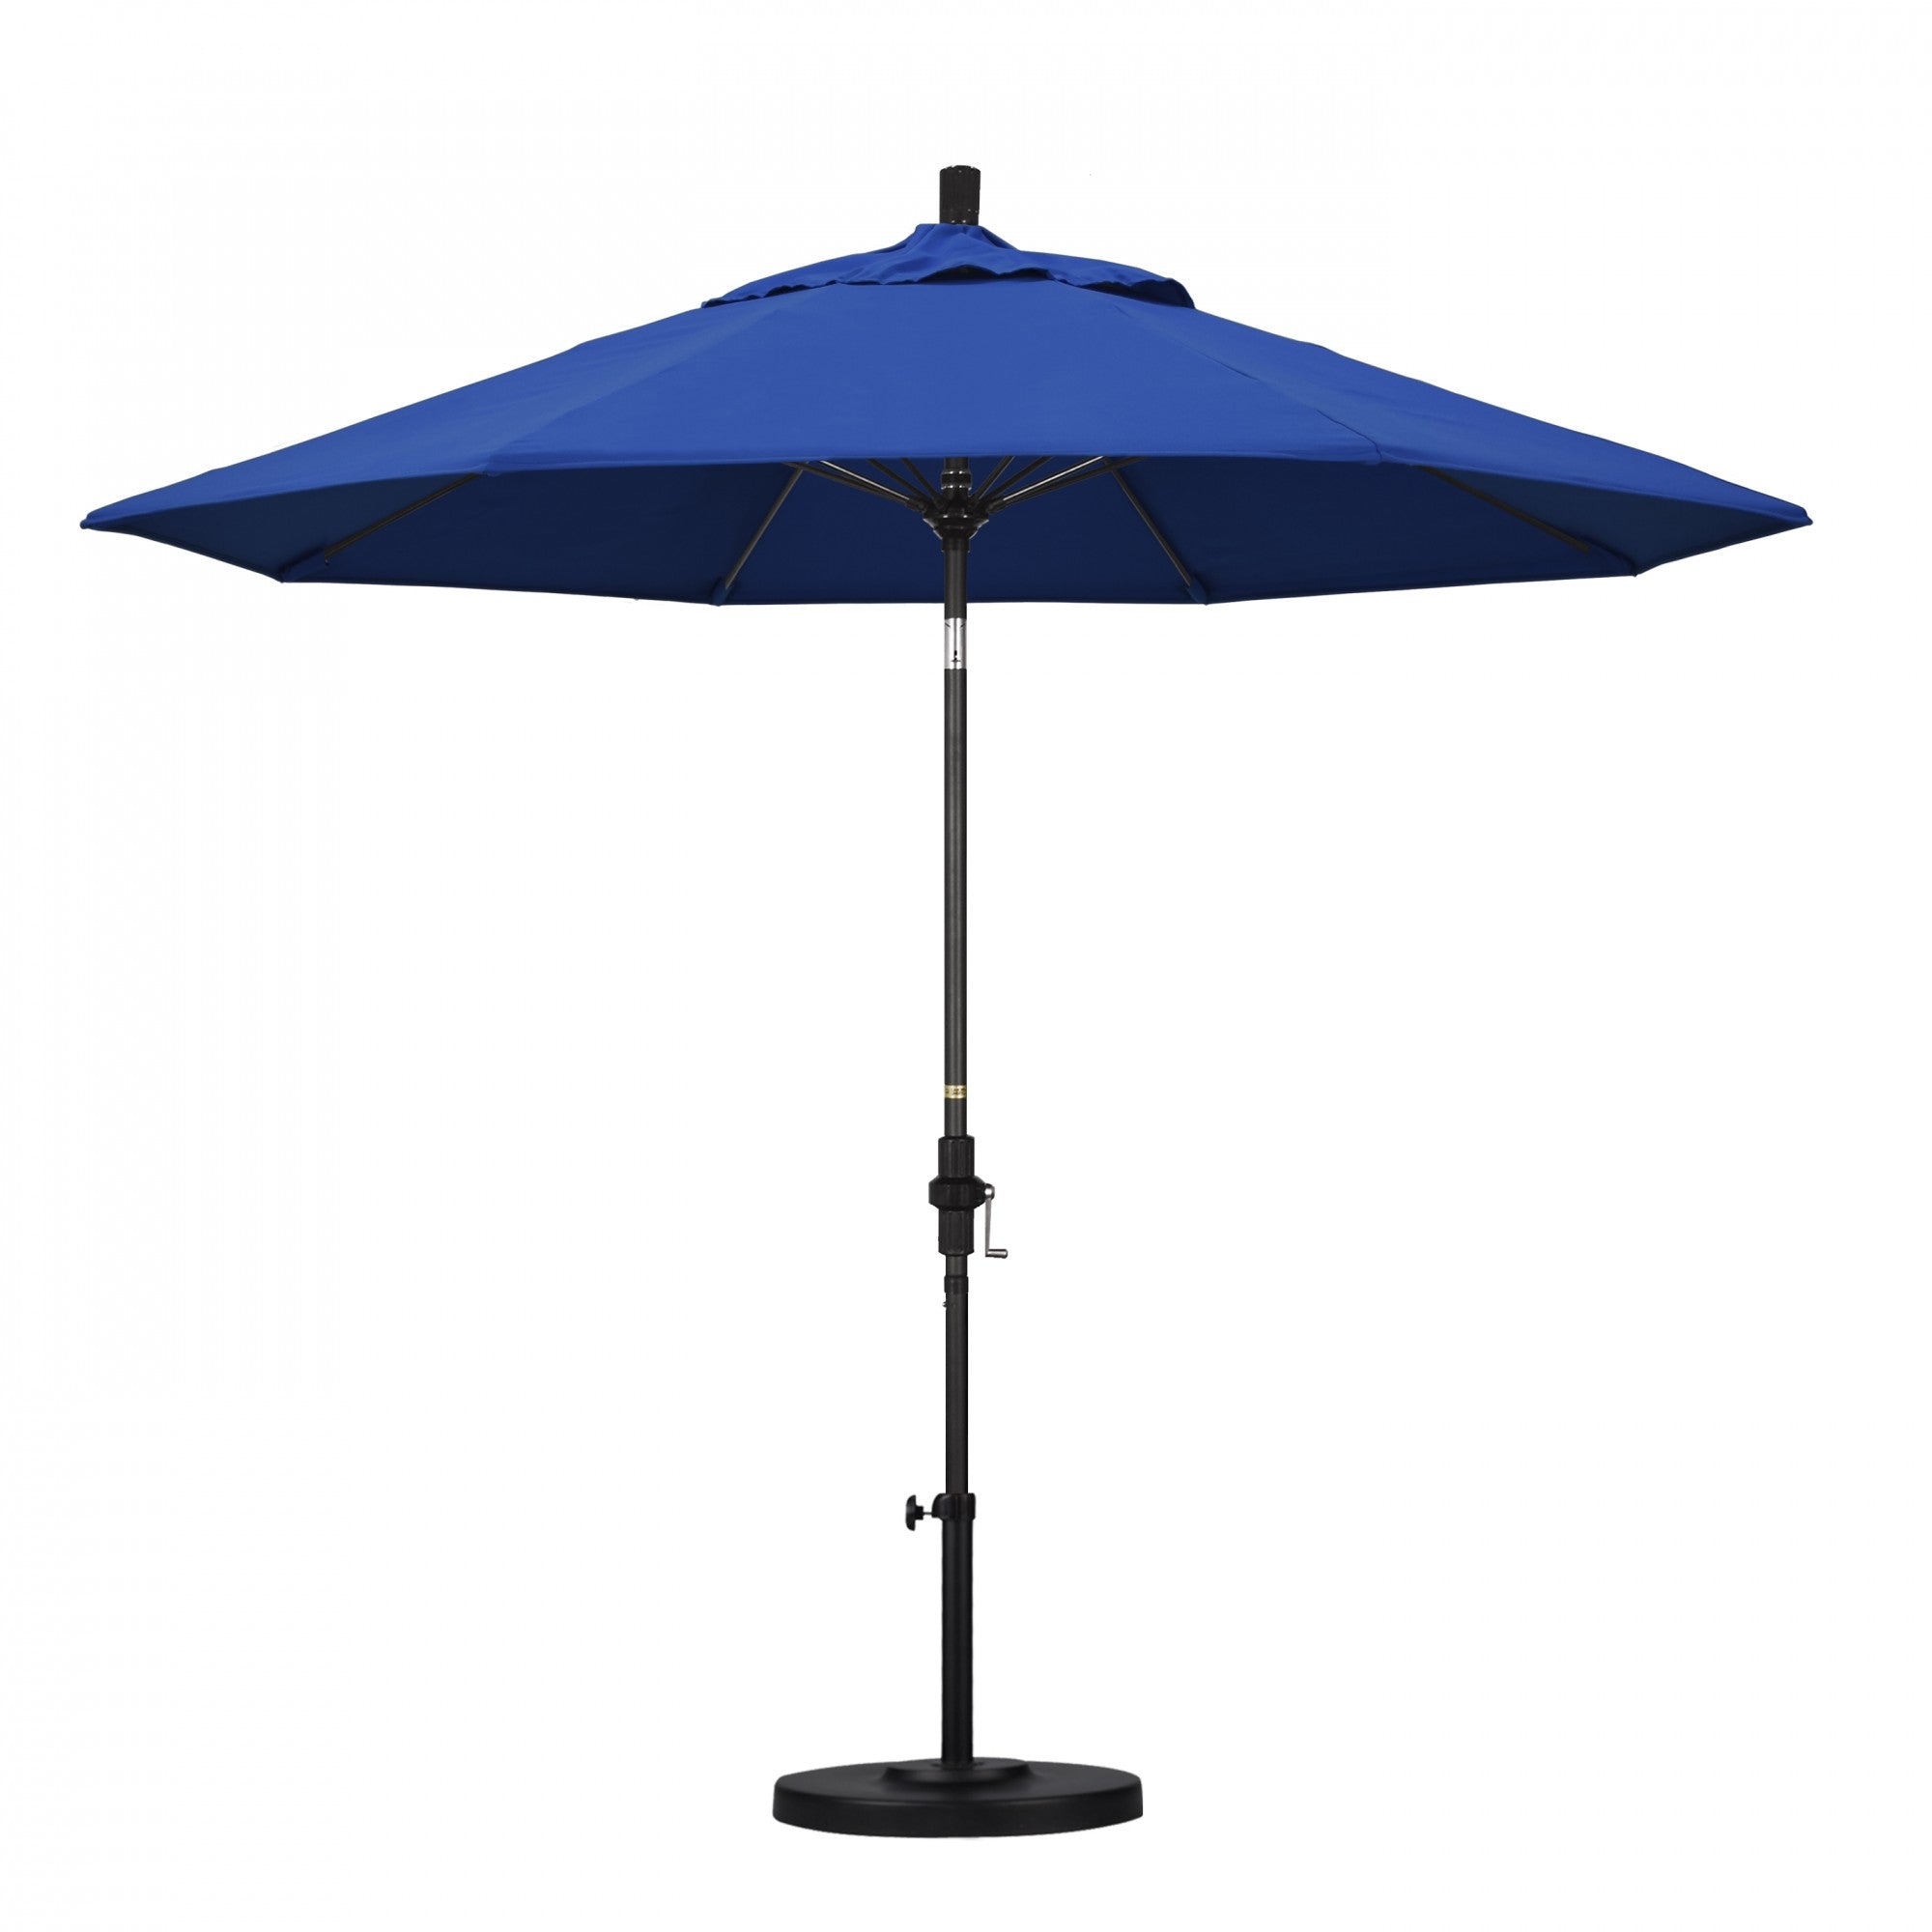 California Umbrella - 9' - Patio Umbrella Umbrella - Aluminum Pole - Pacific Blue - Pacifica - GSCUF908705-SA01